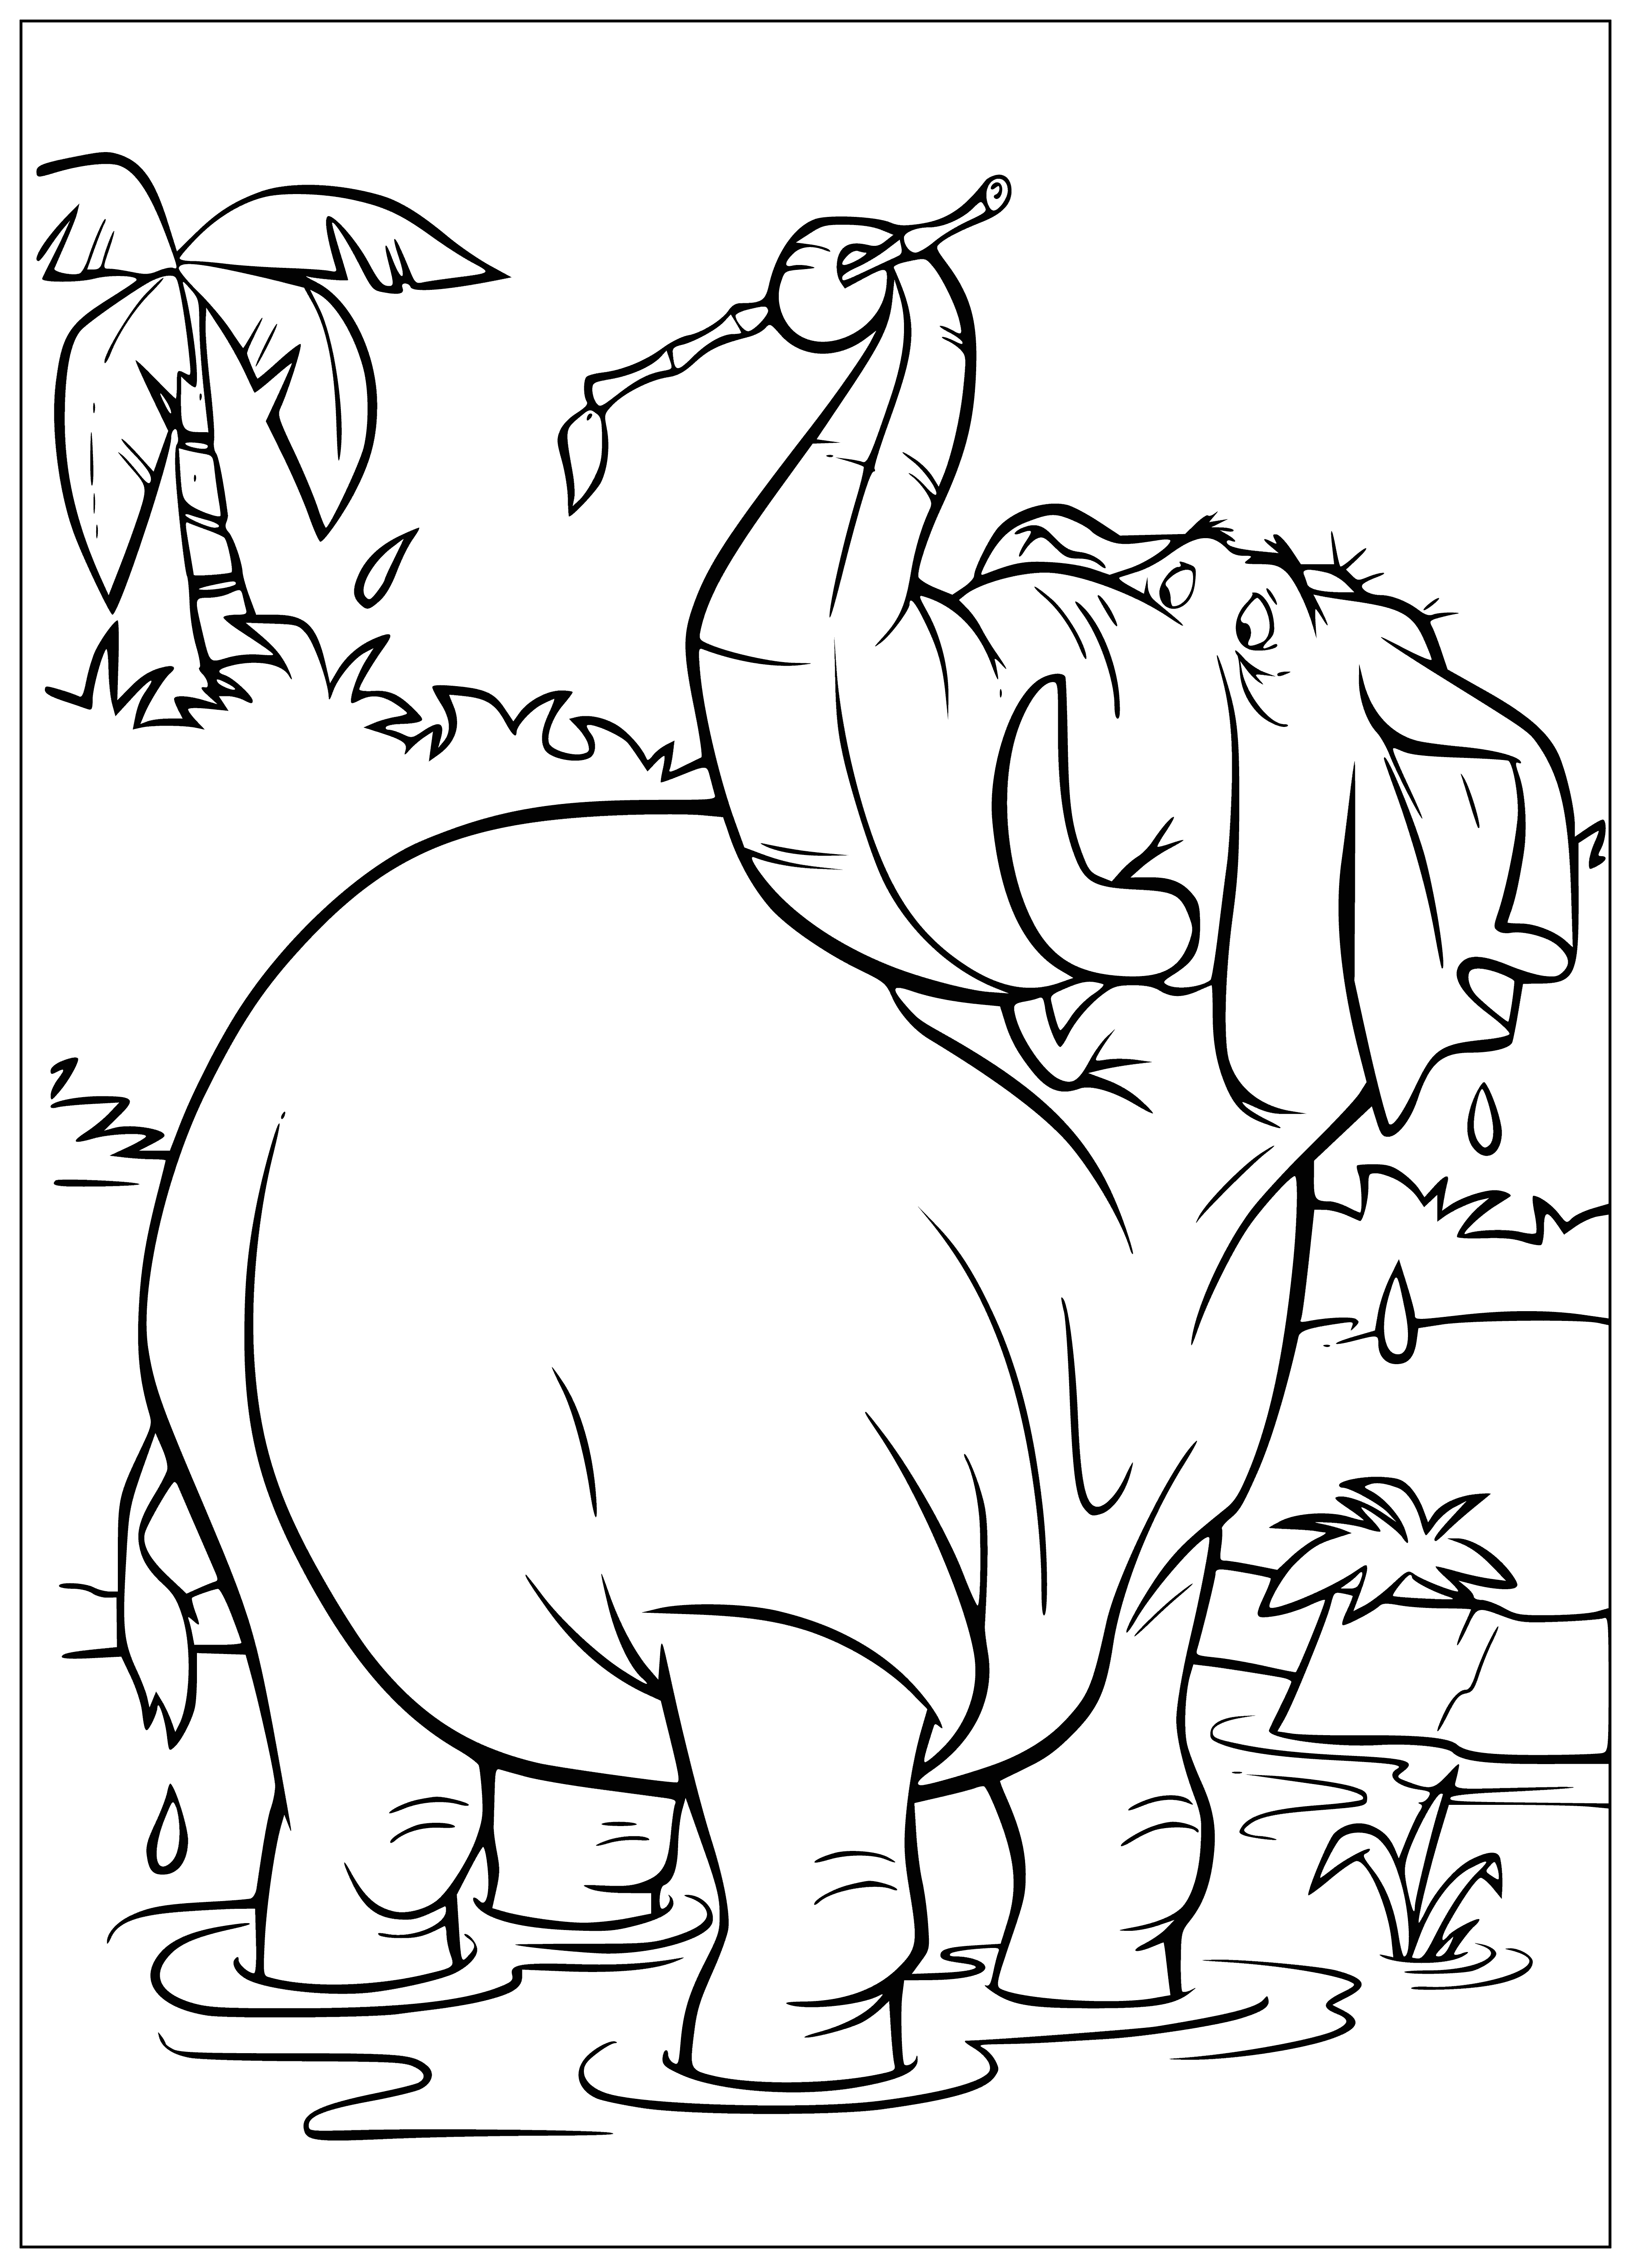 Baloo and Mowgli coloring page